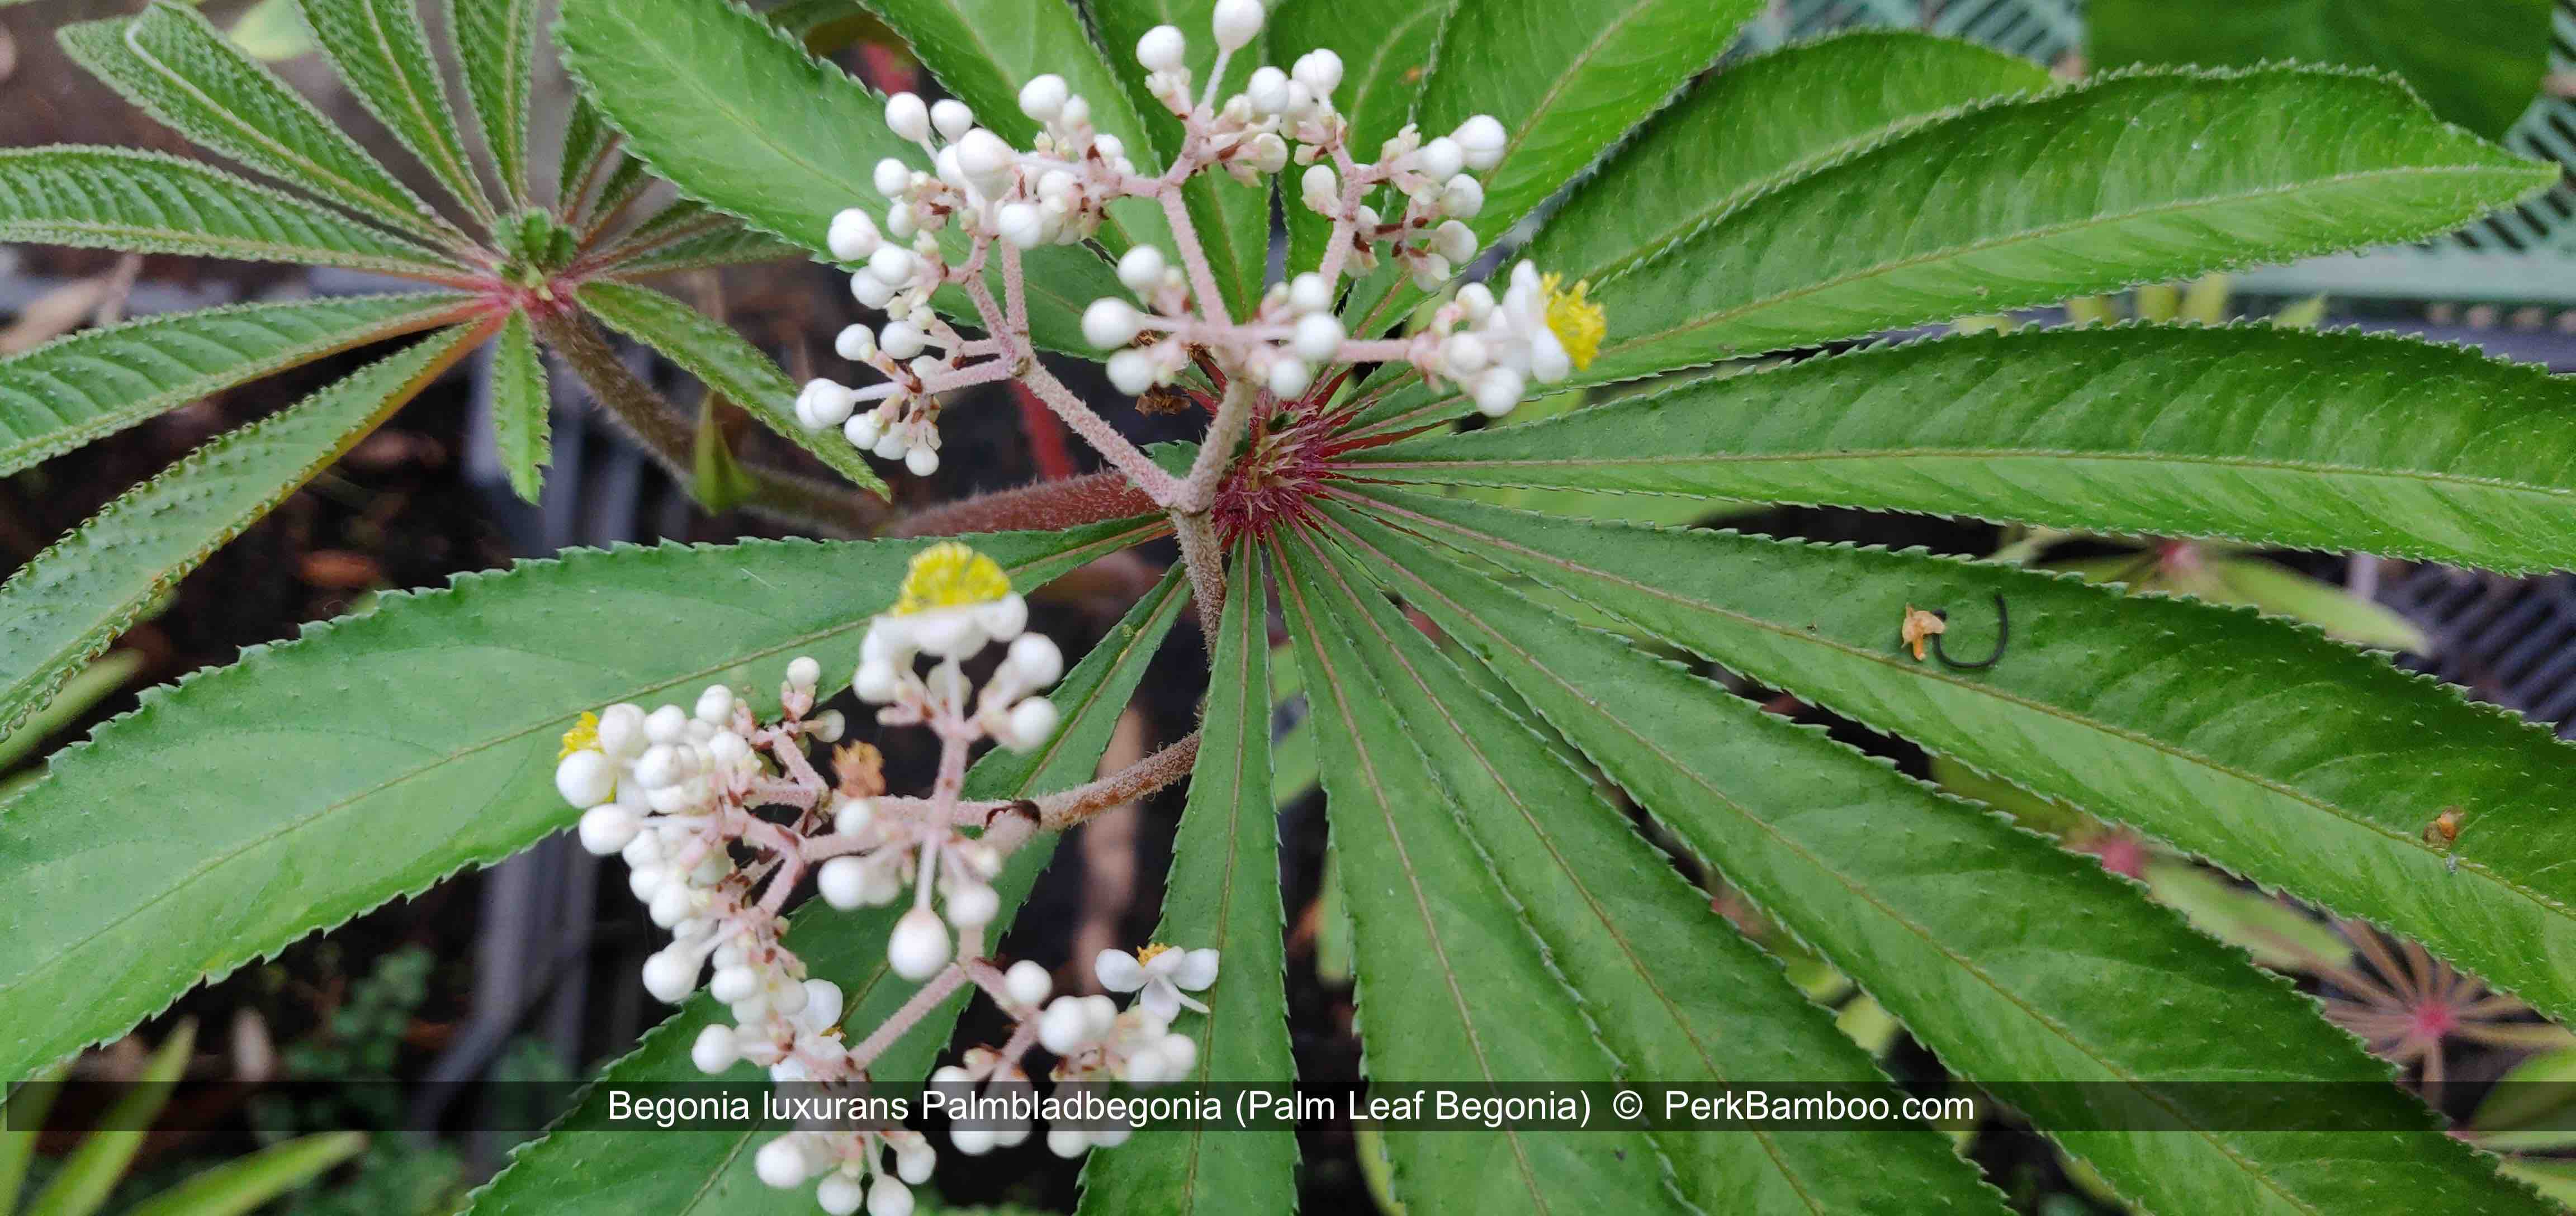 Begonia luxurians Palmbladbegonia1 PerkBamboo com